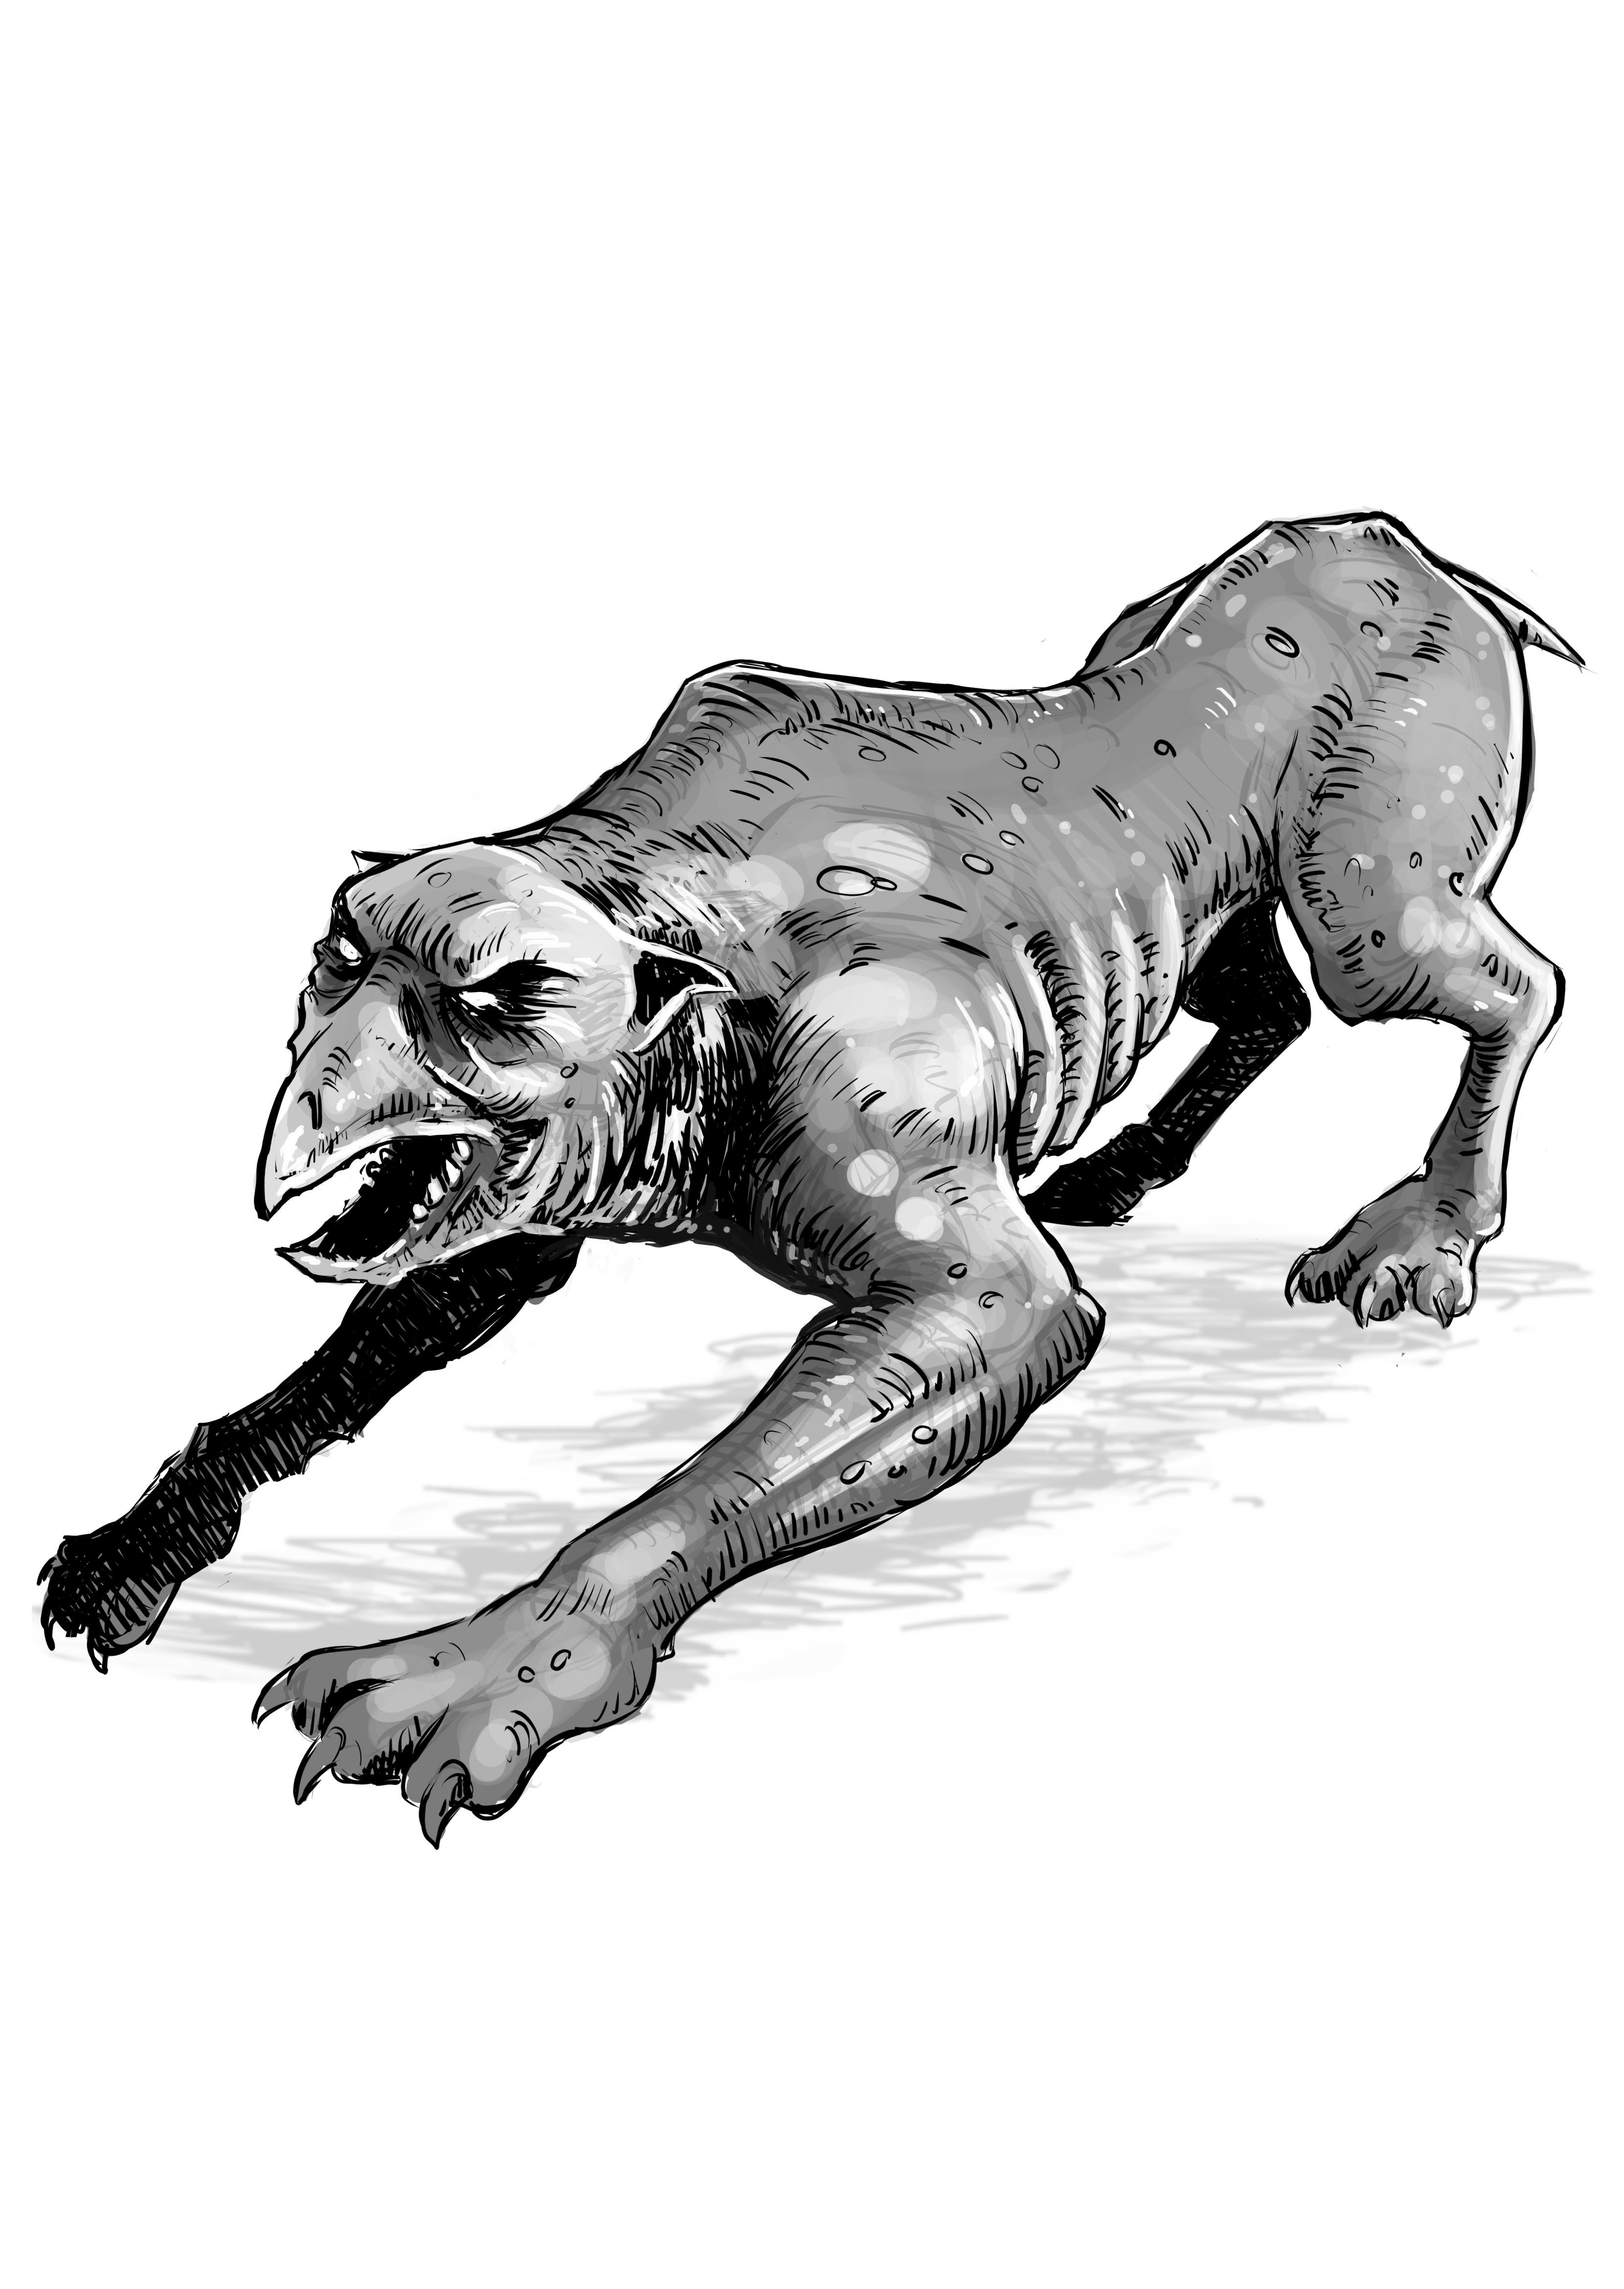 Montauk Monster sketch